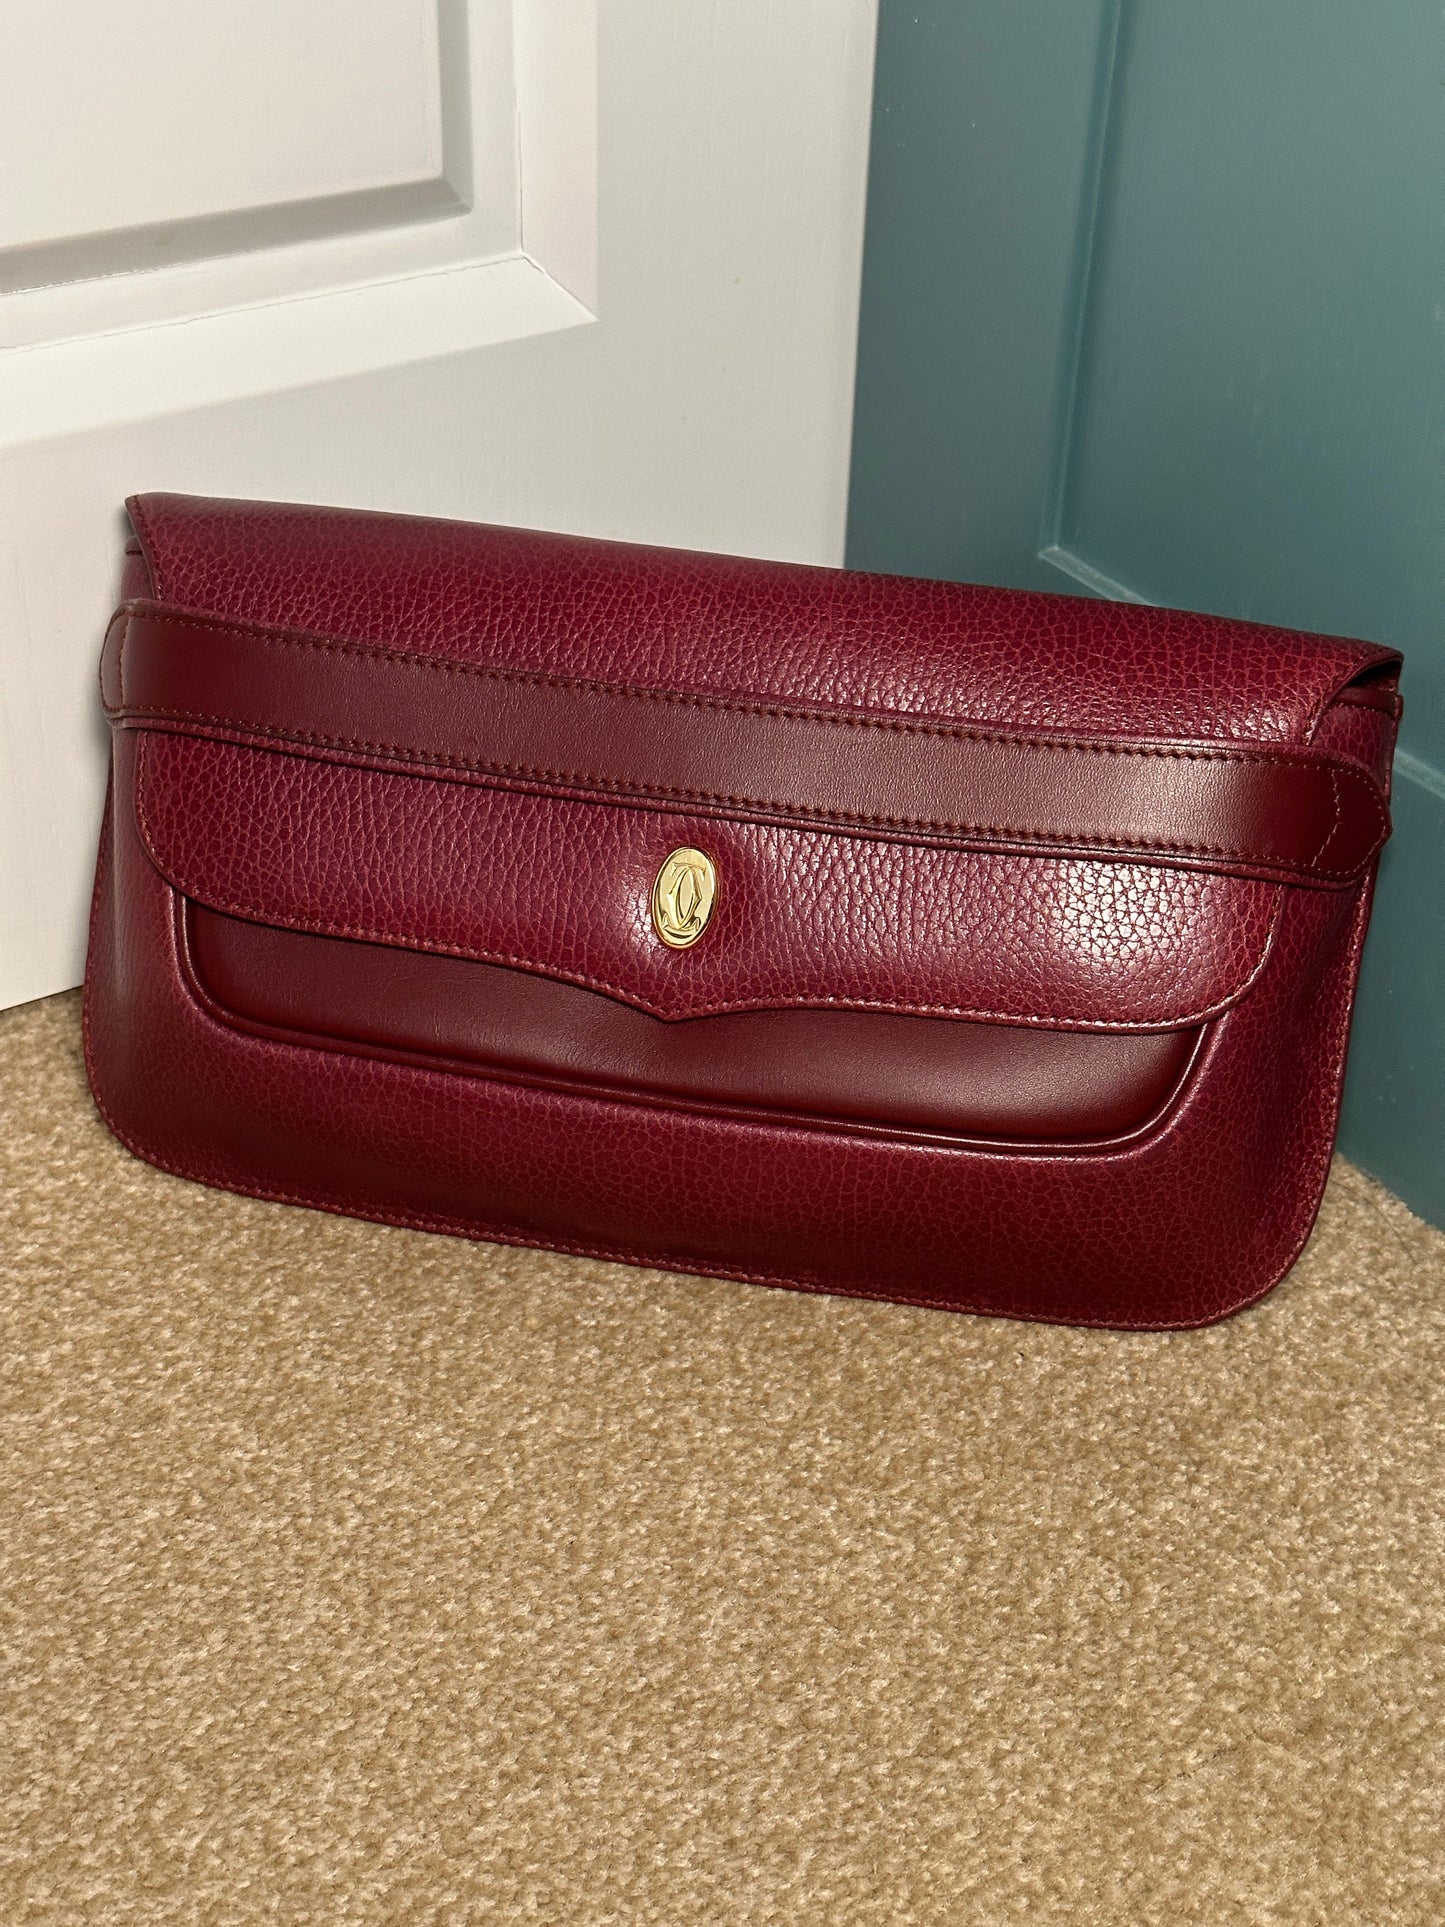 CARTIER VINTAGE 100% Authentic Genuine, Must de Cartier Leather Clutch Bag, Dark Red 1990's, Great Condition, Grade AB